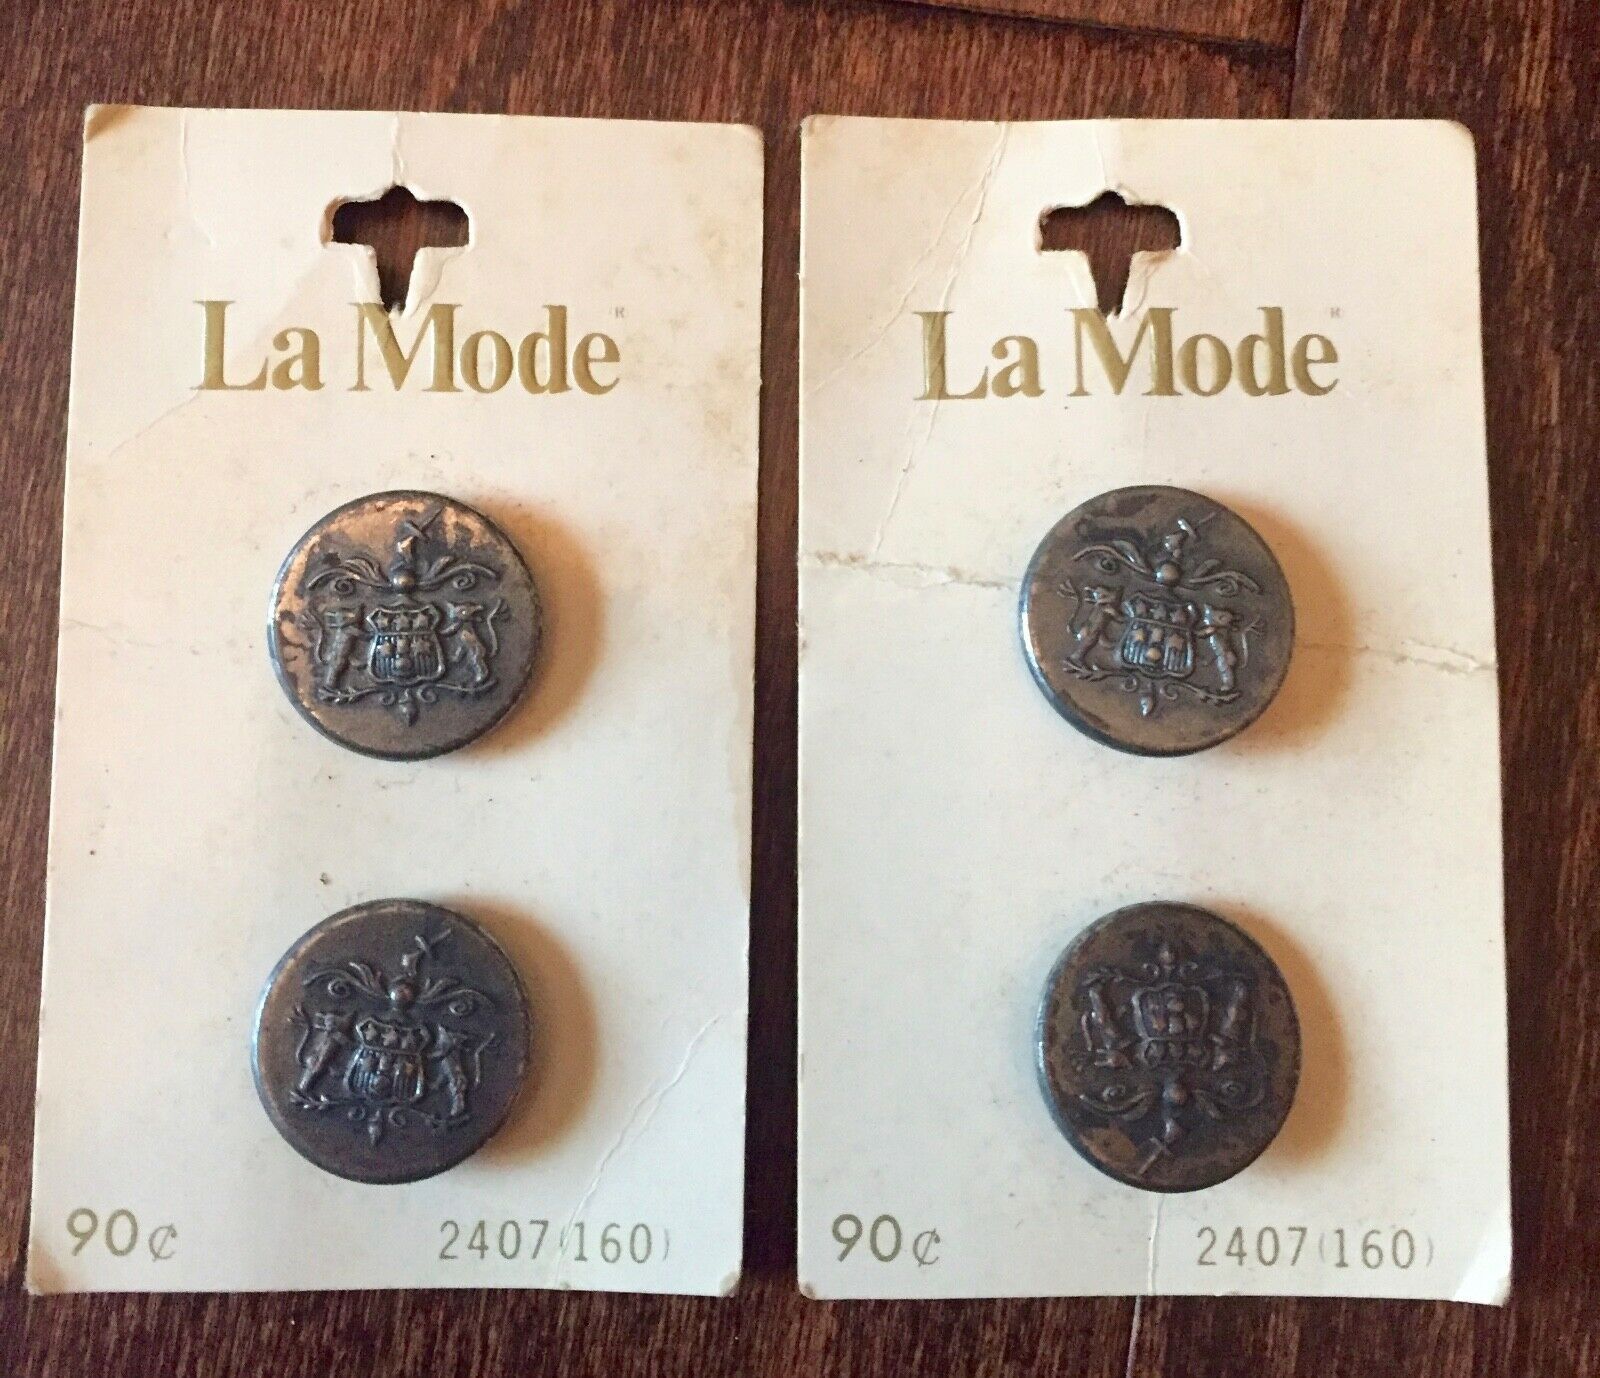 LA Mode Vintage Buttons Pine River Mittens 22 mm Leather Buttons 7/8 inch 2 Buttons Genuine Leather Braided Buttons